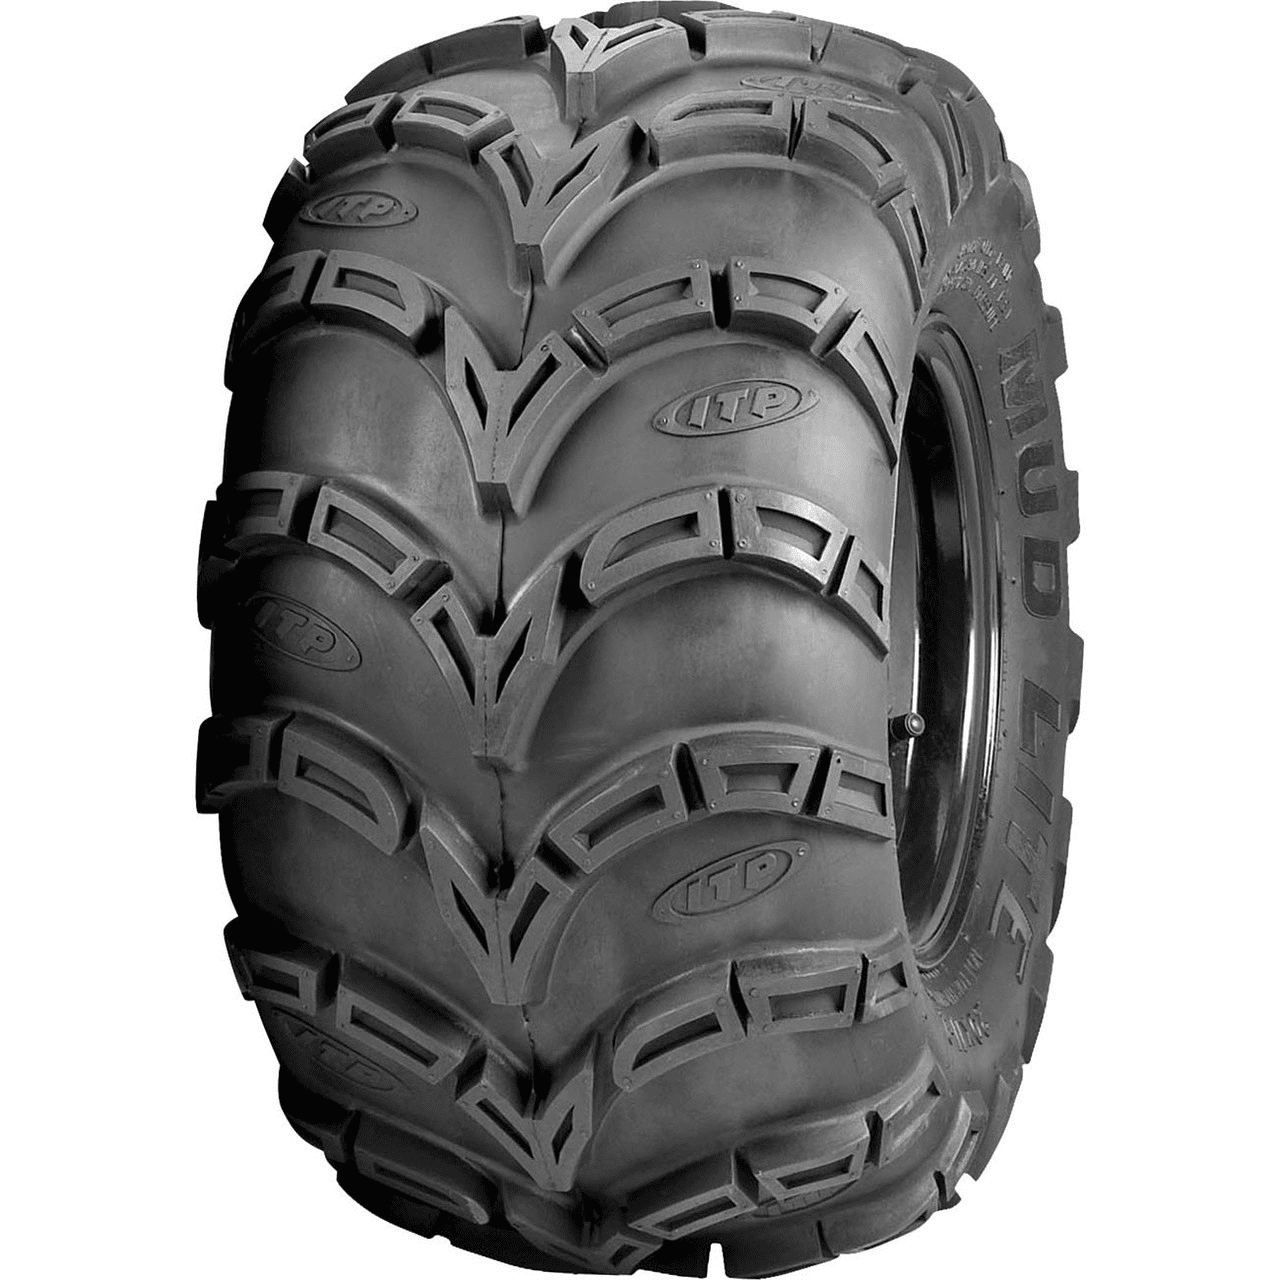 ITP Mud Lite AT Tire 24x8-12 for Kubota RTV900XT Diesel 2011-2013 